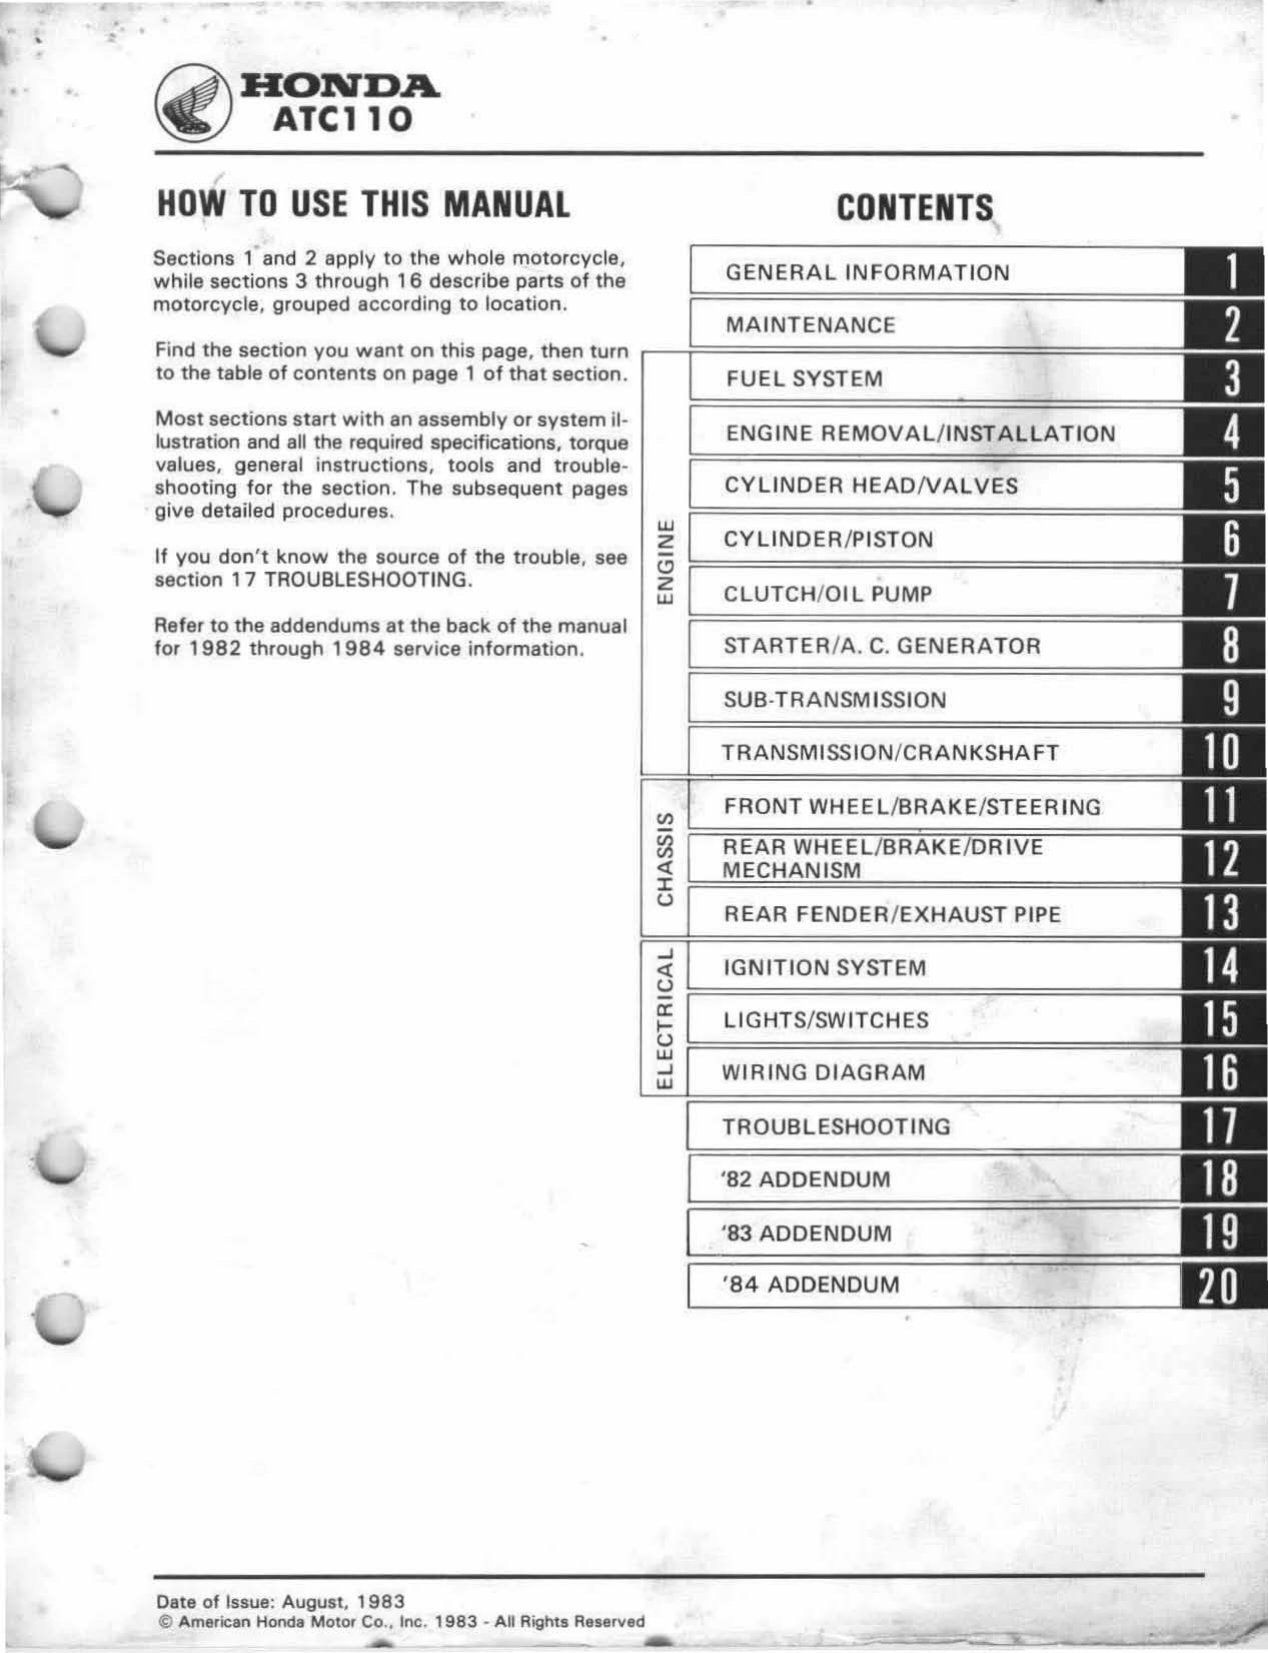 1981-1984 Honda ATC110 manual Preview image 3